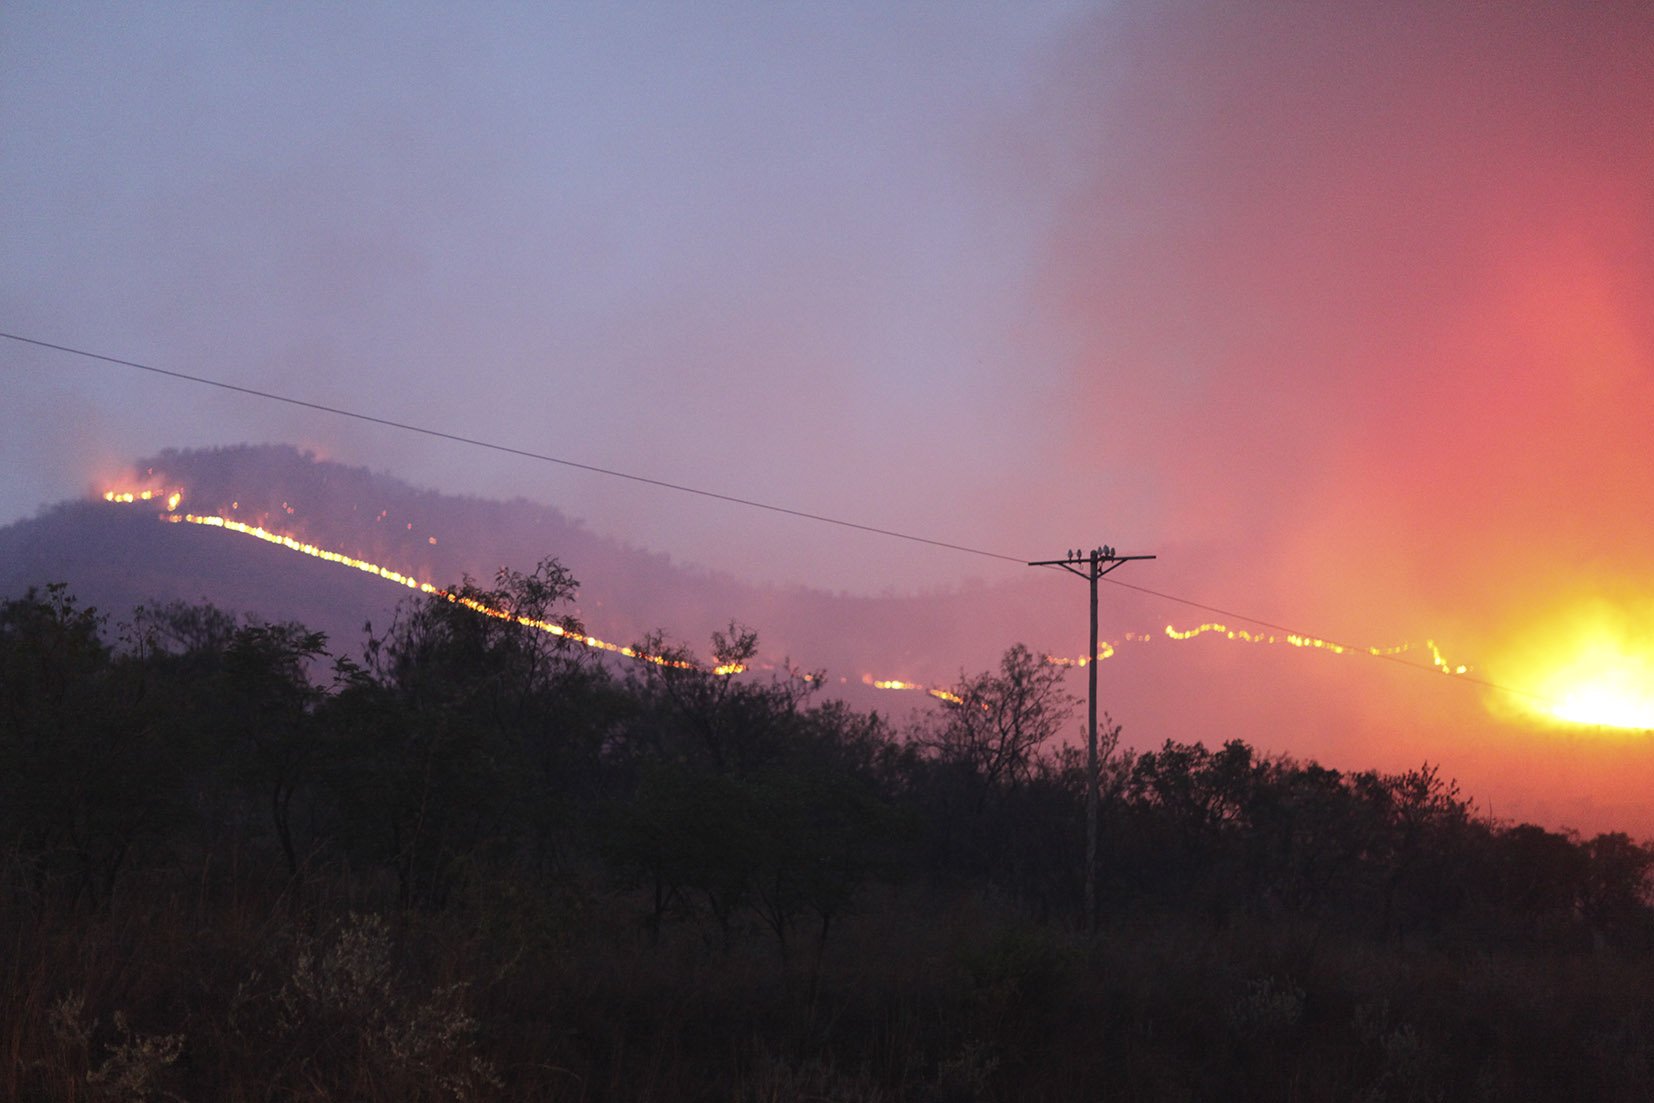  Unsupervised Velt Fire near Zebediela, Limpopo/ 2010 